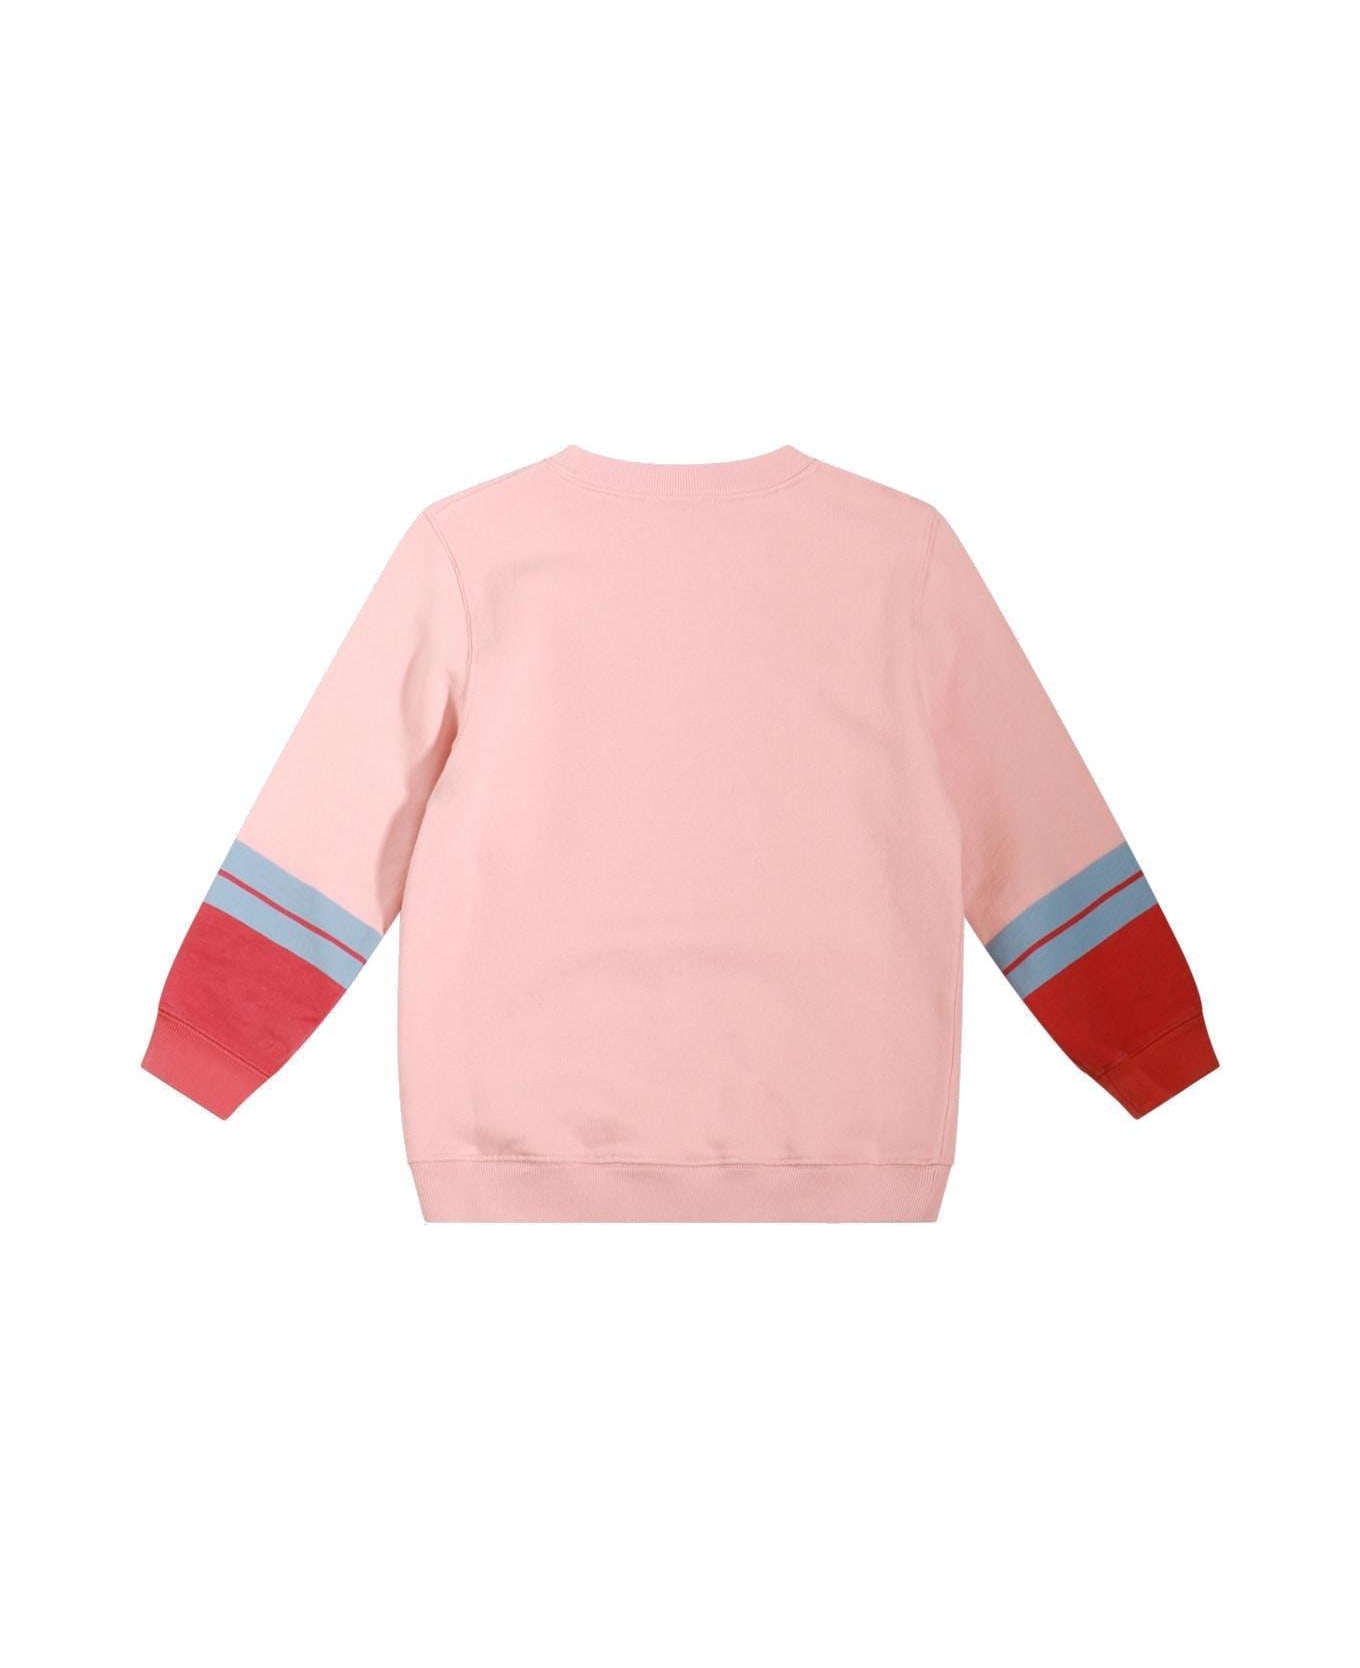 Gucci Logo Printed Crewneck Sweatshirt ニットウェア＆スウェットシャツ